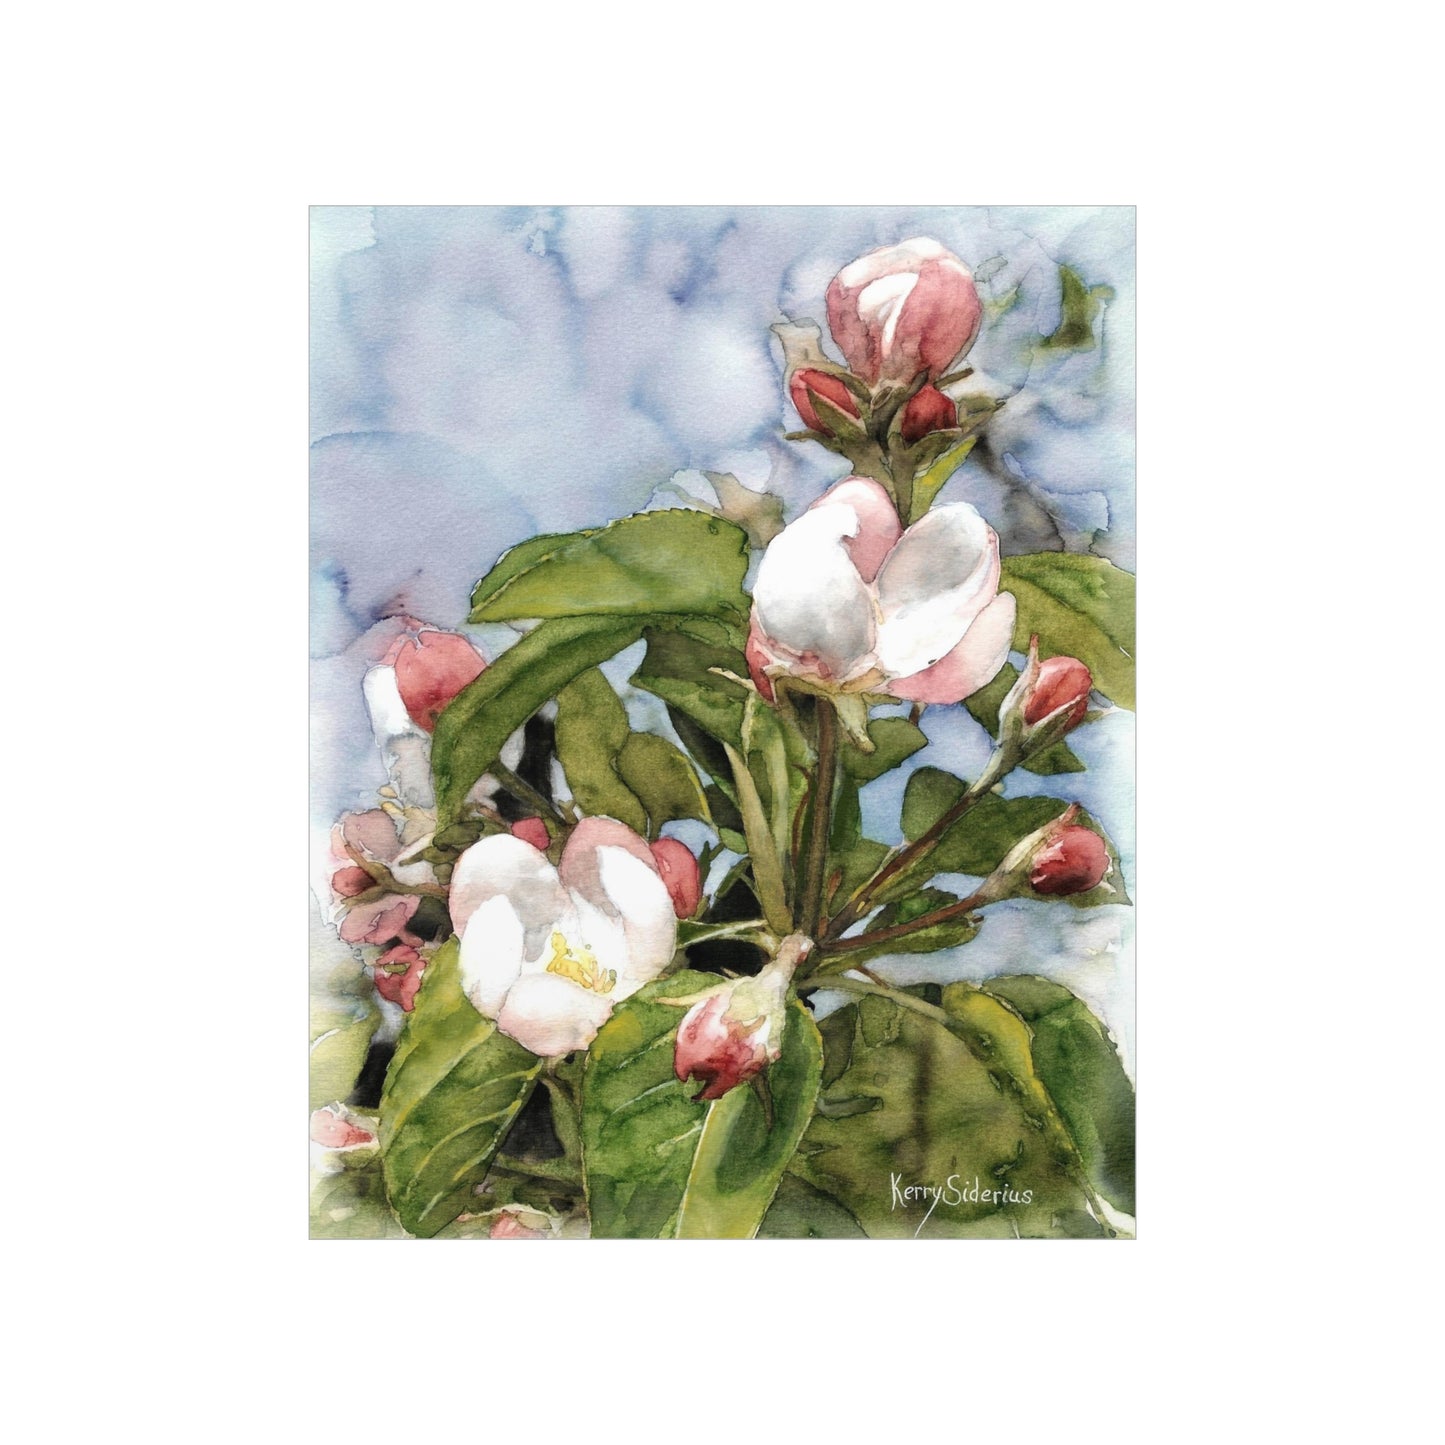 "Chelan Apple Blossoms" Matte Archival Poster Print - Kerry Siderius Art 